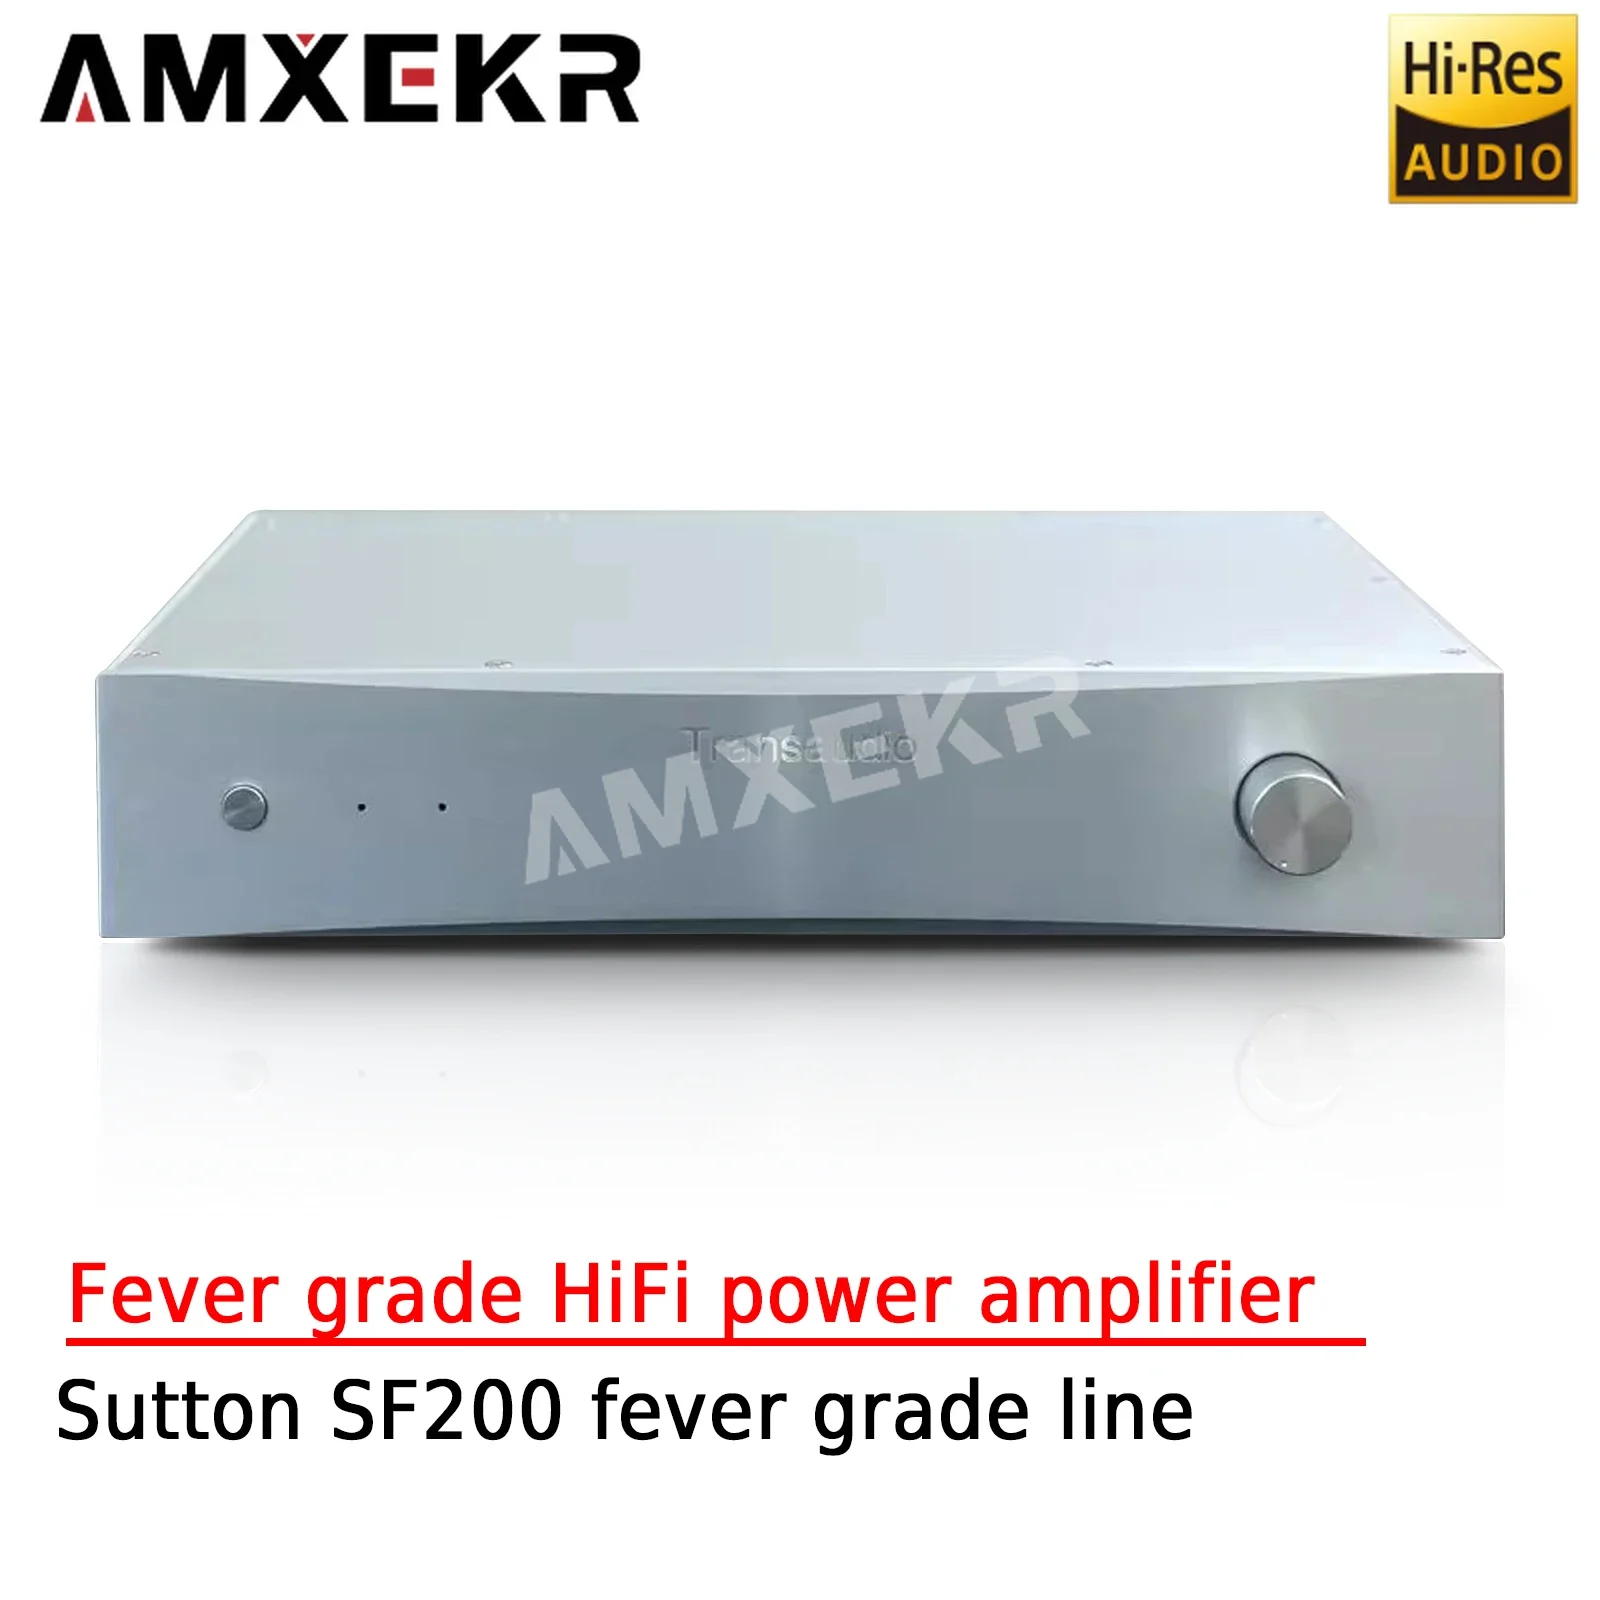 

AMXEKR Fever Grade HiFi Amplifier Seton Amplifier High-end Model SF200 Fever Grade Line Home Theater